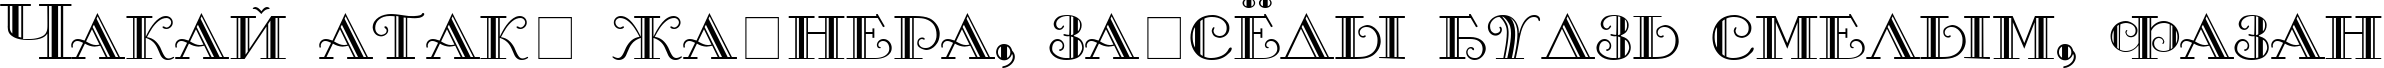 Пример написания шрифтом Monte-Carlo текста на белорусском